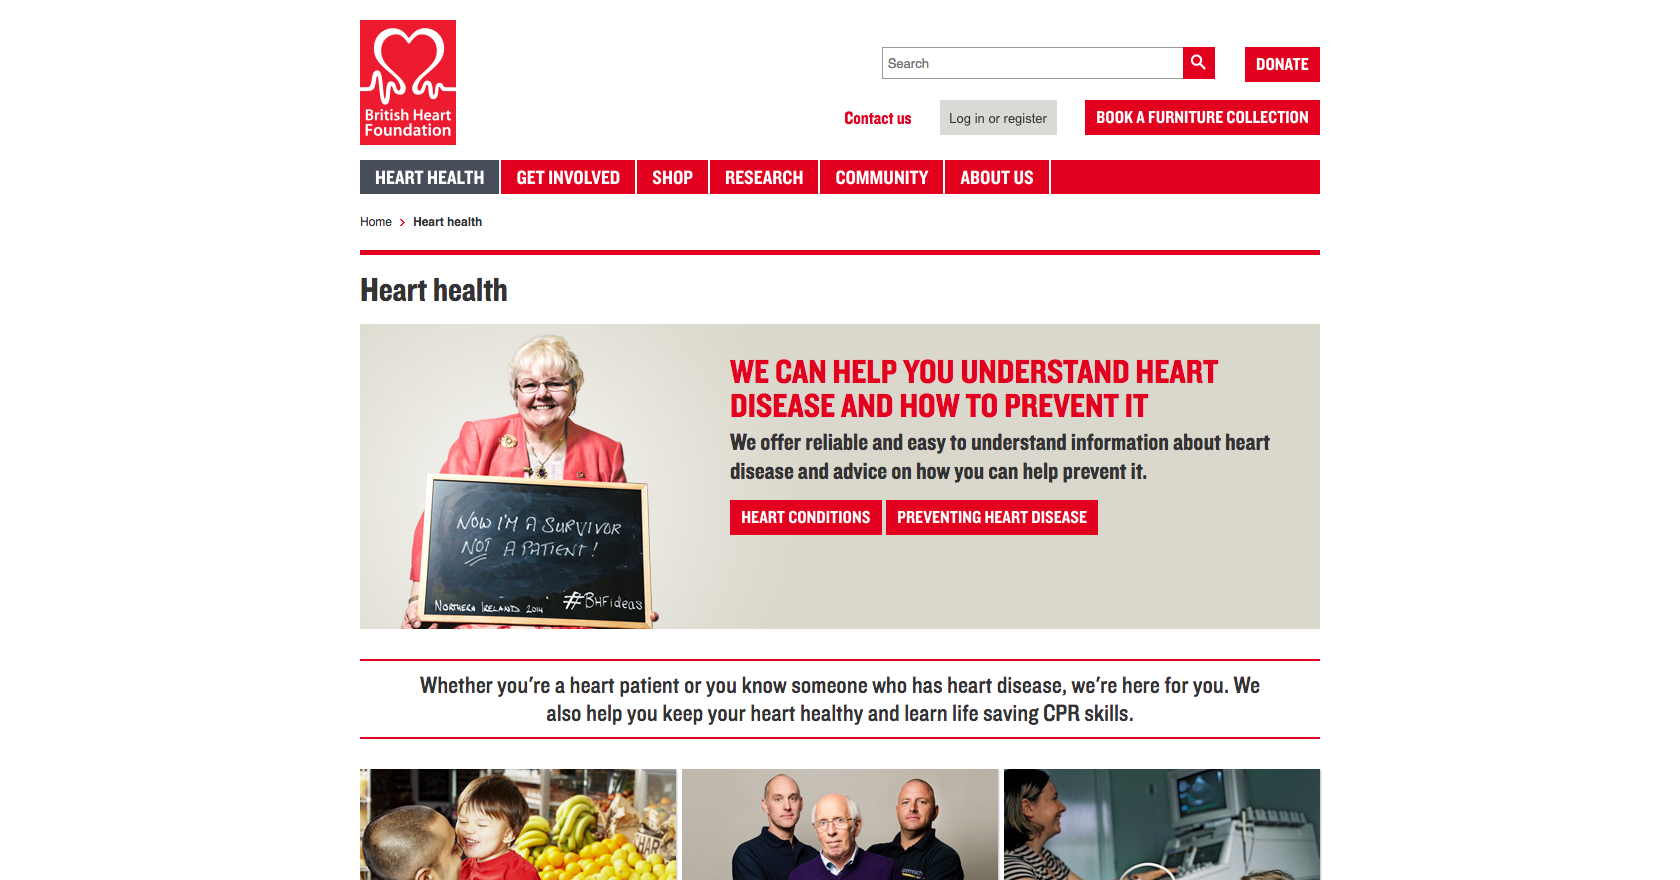 The British Heart Foundation website